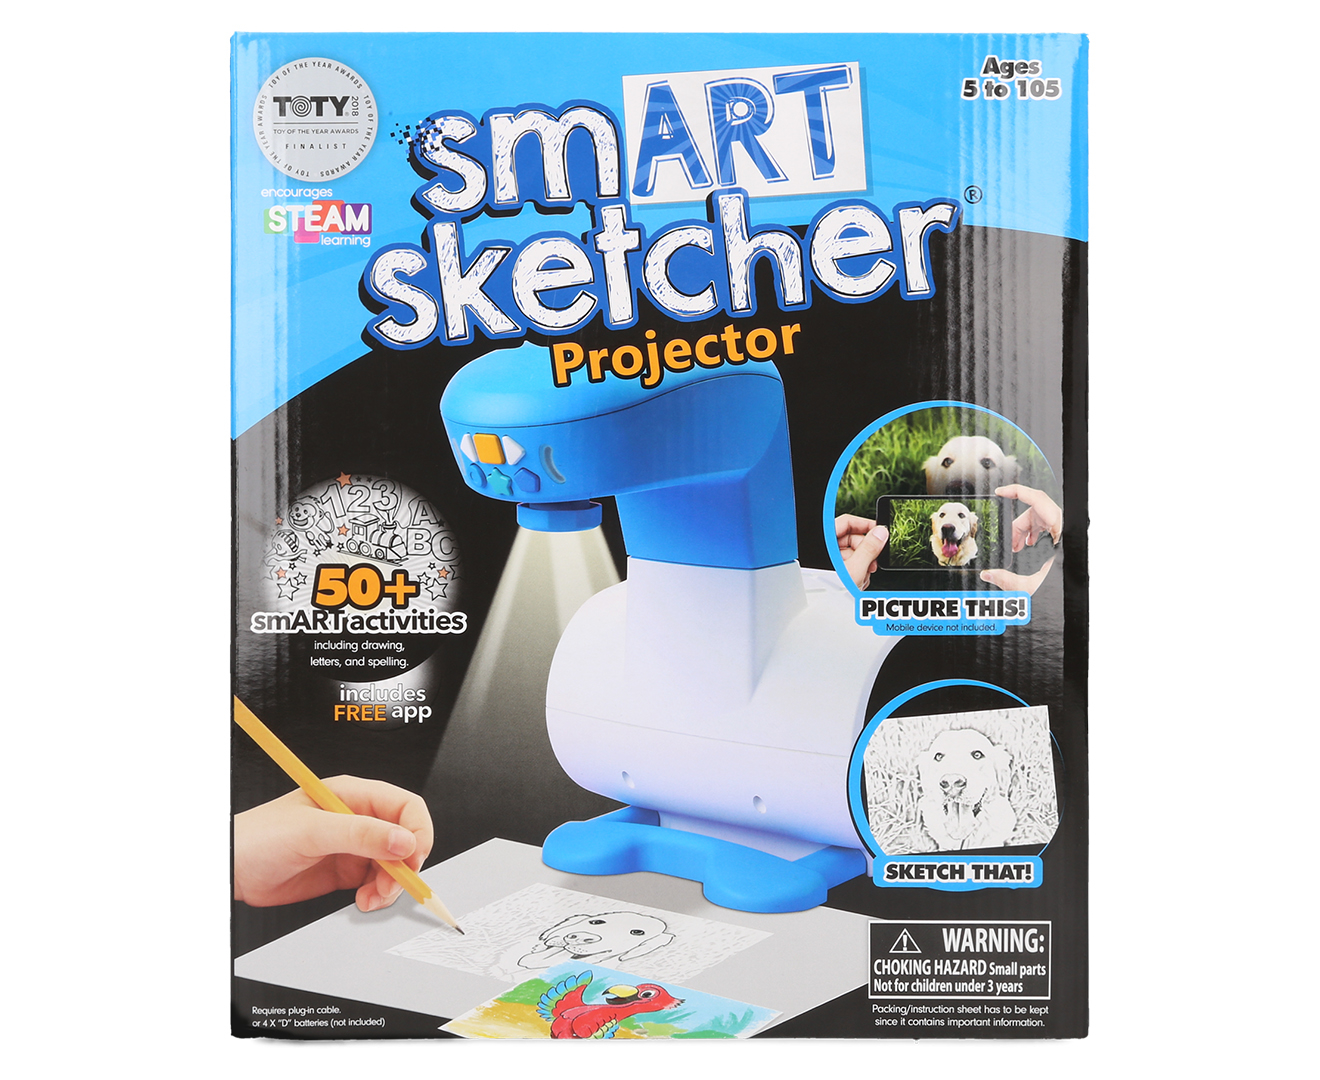 smart sketcher projector sd card not working